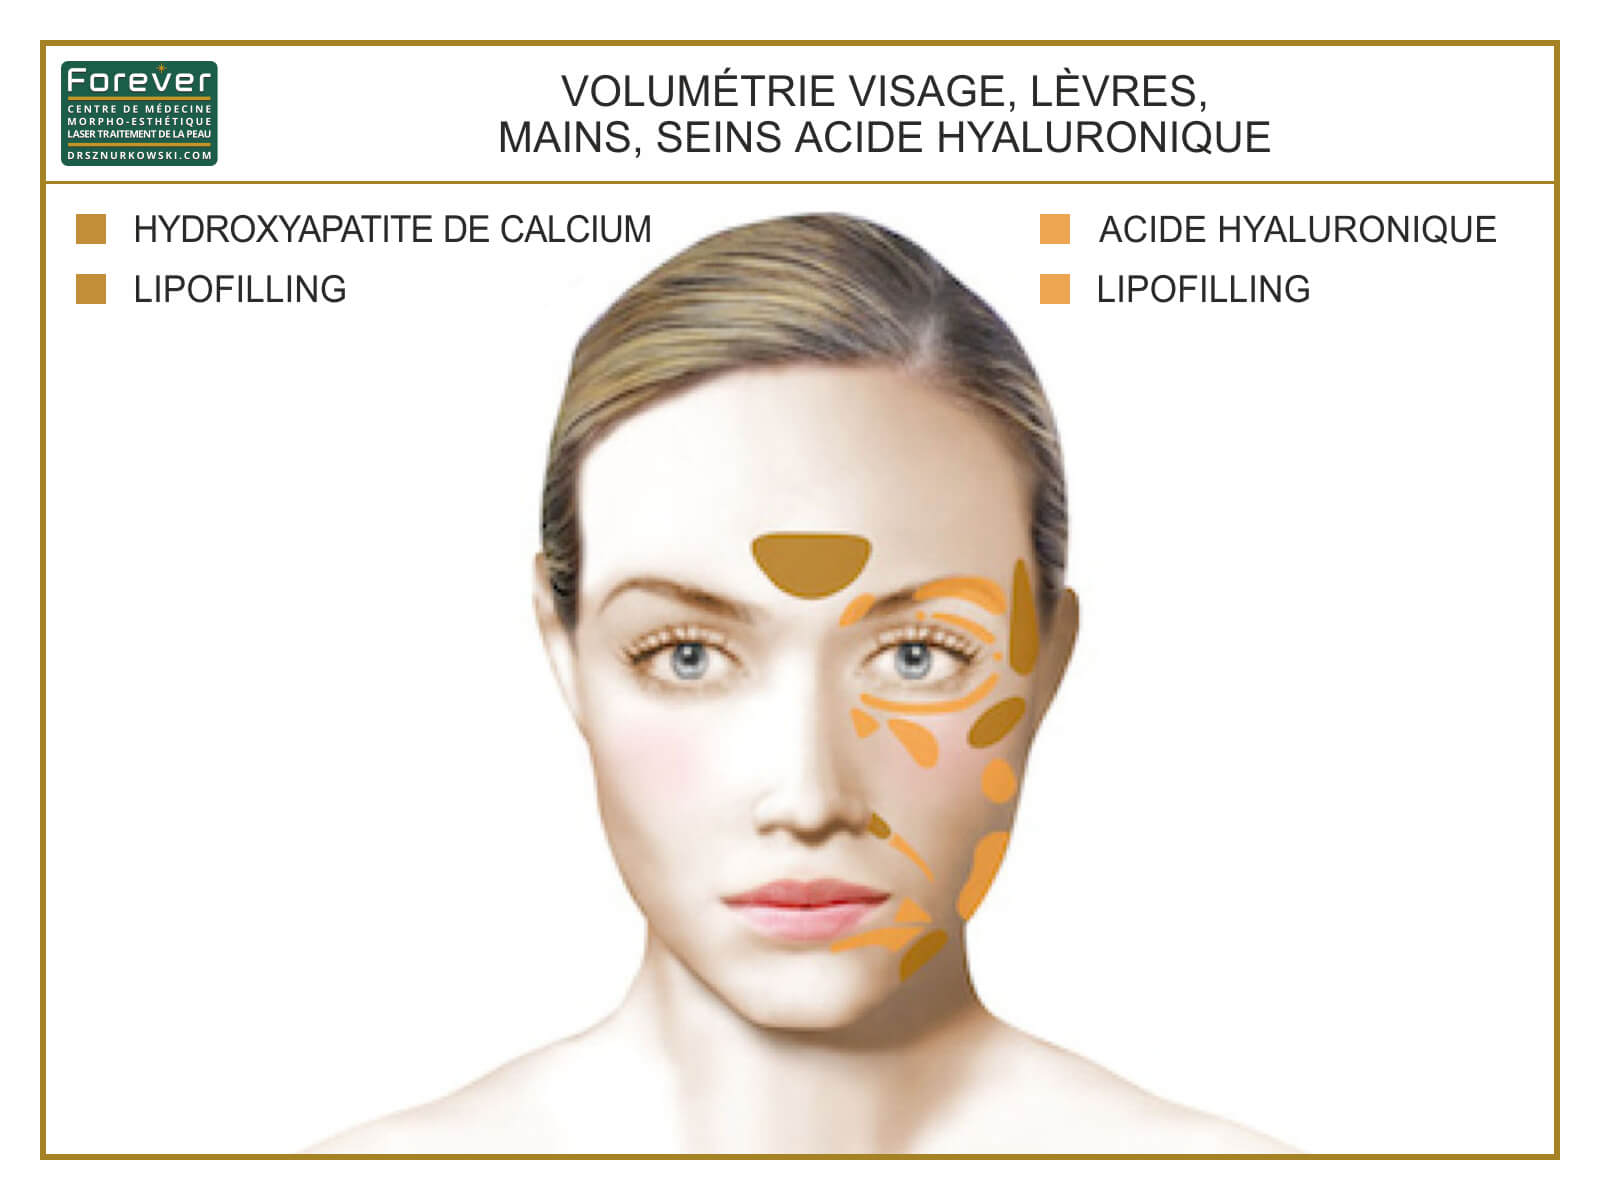 Volumetry of Face, Lips, Palms, Breast Hyaluronic Acid (80x60) FR.jpg